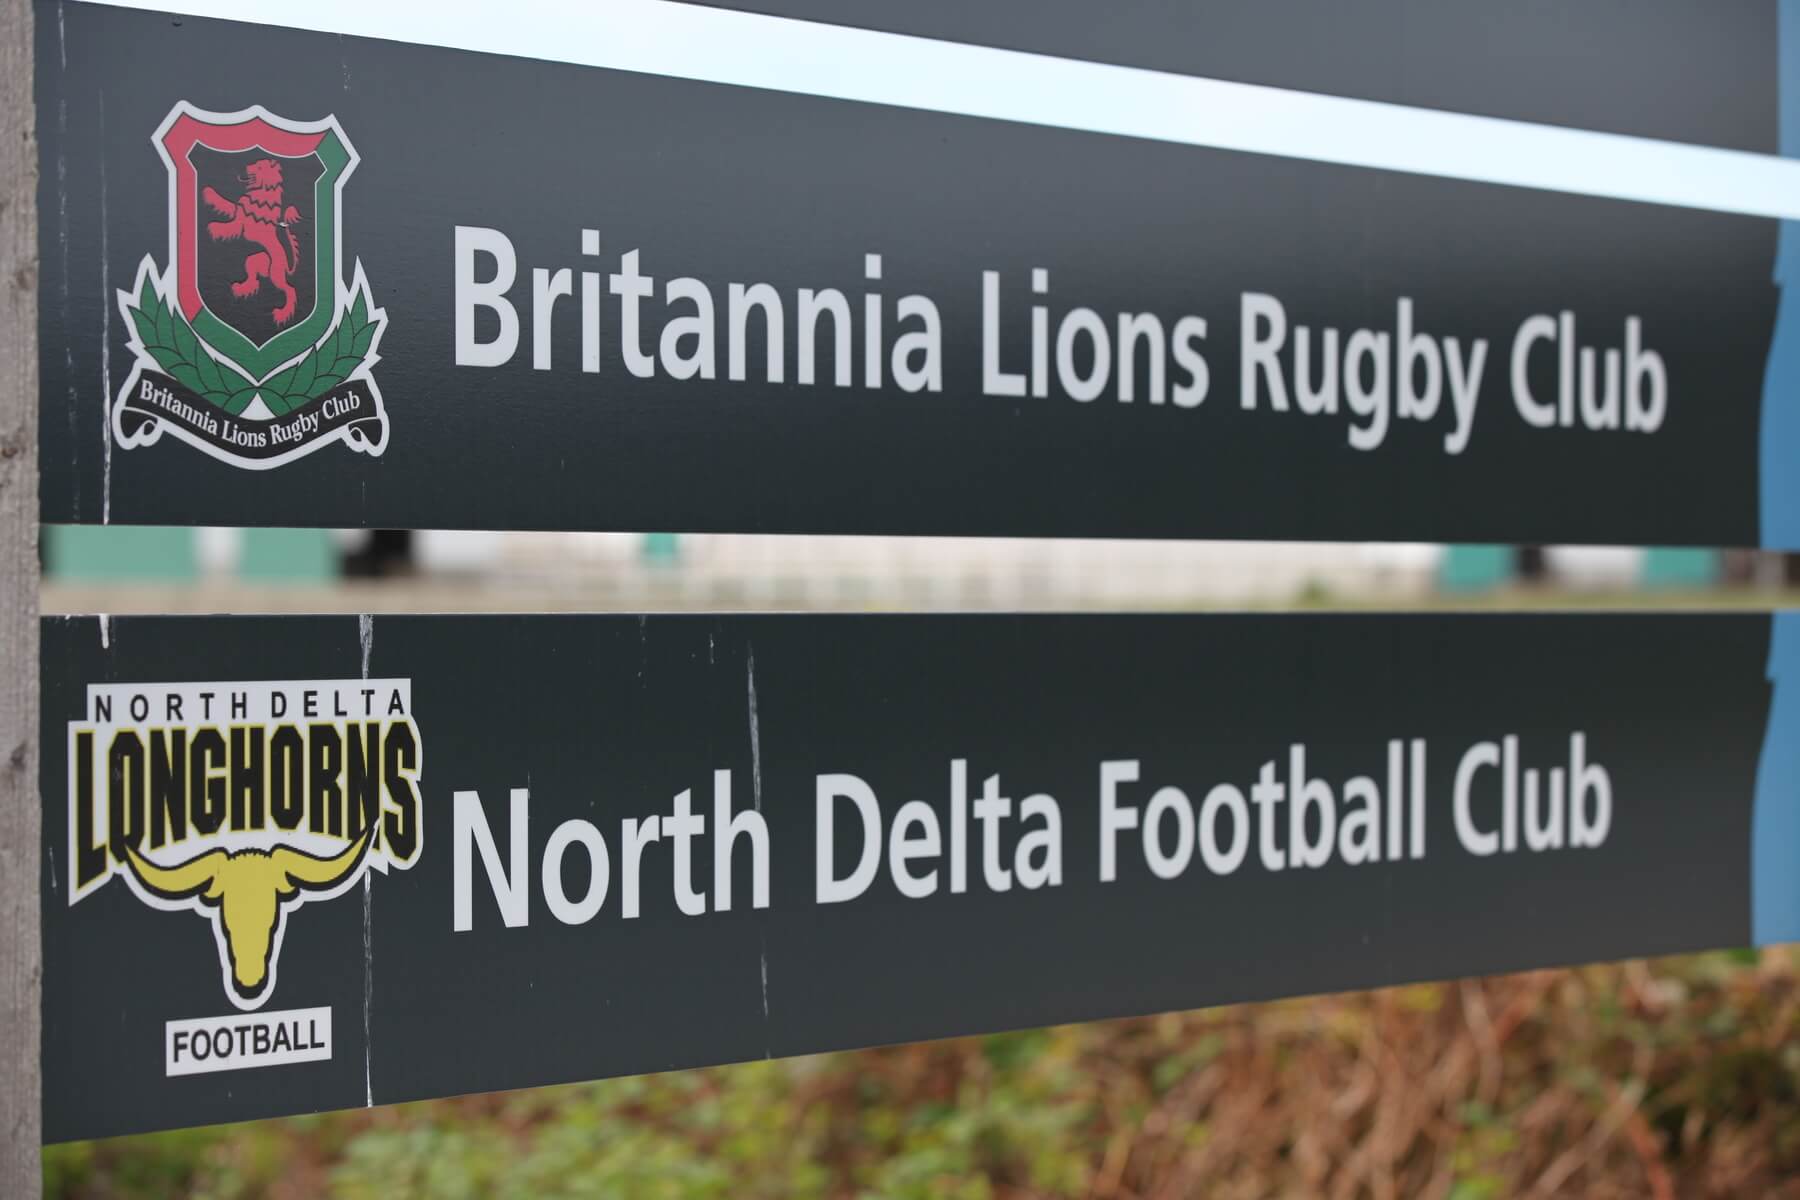 Britannia Lions Rugby Club